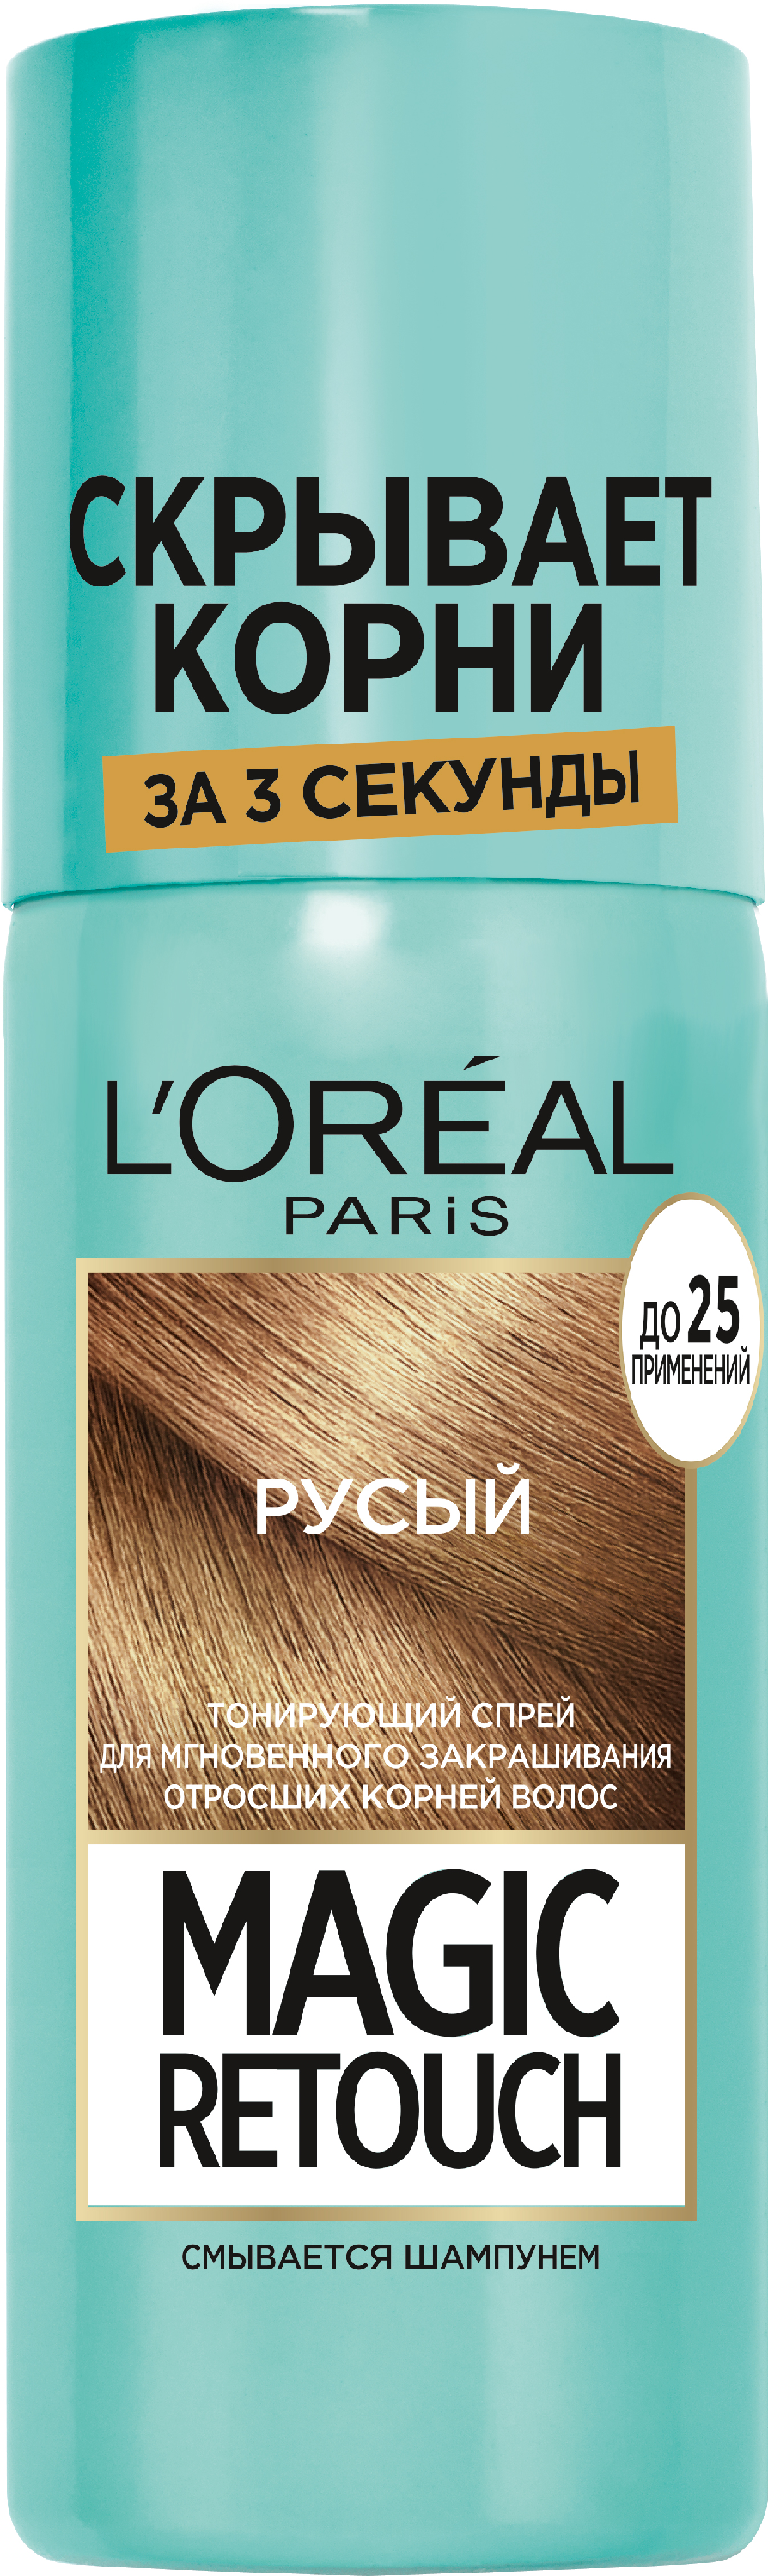 L'Oreal Тонирующий спрей для волос Paris Magic Retouch #4 75 мл Русый